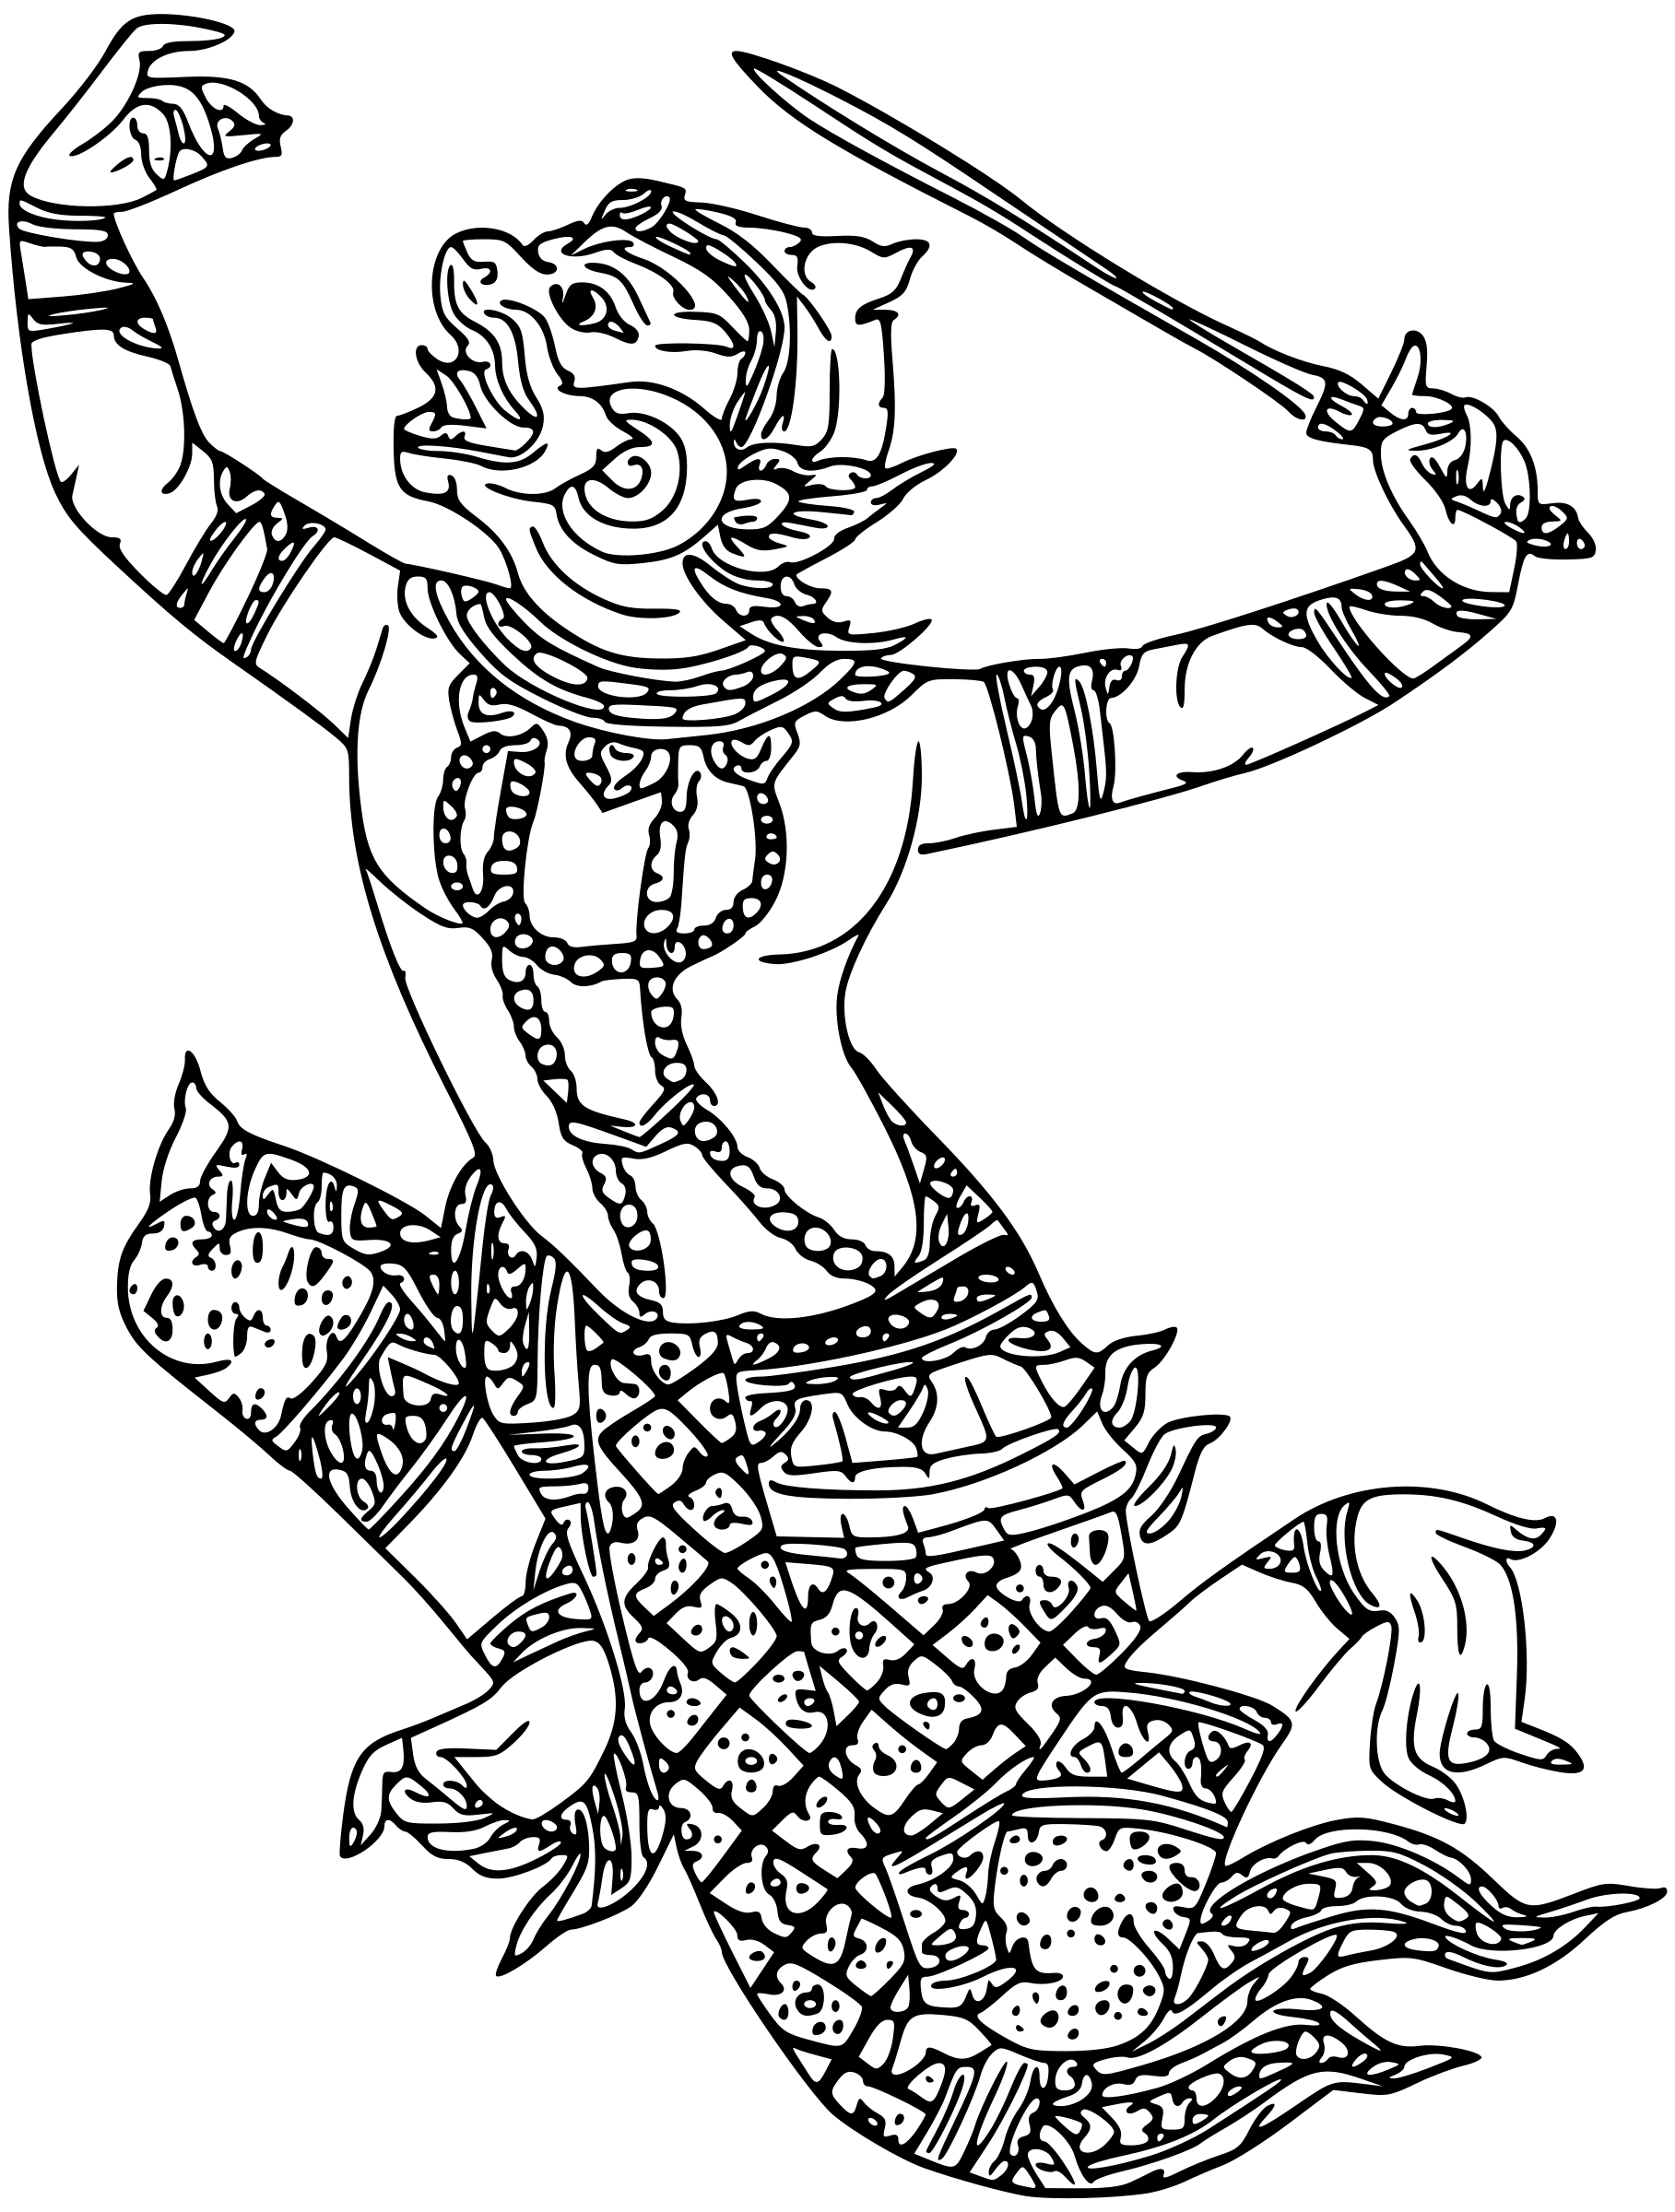 logo clipart hanuman